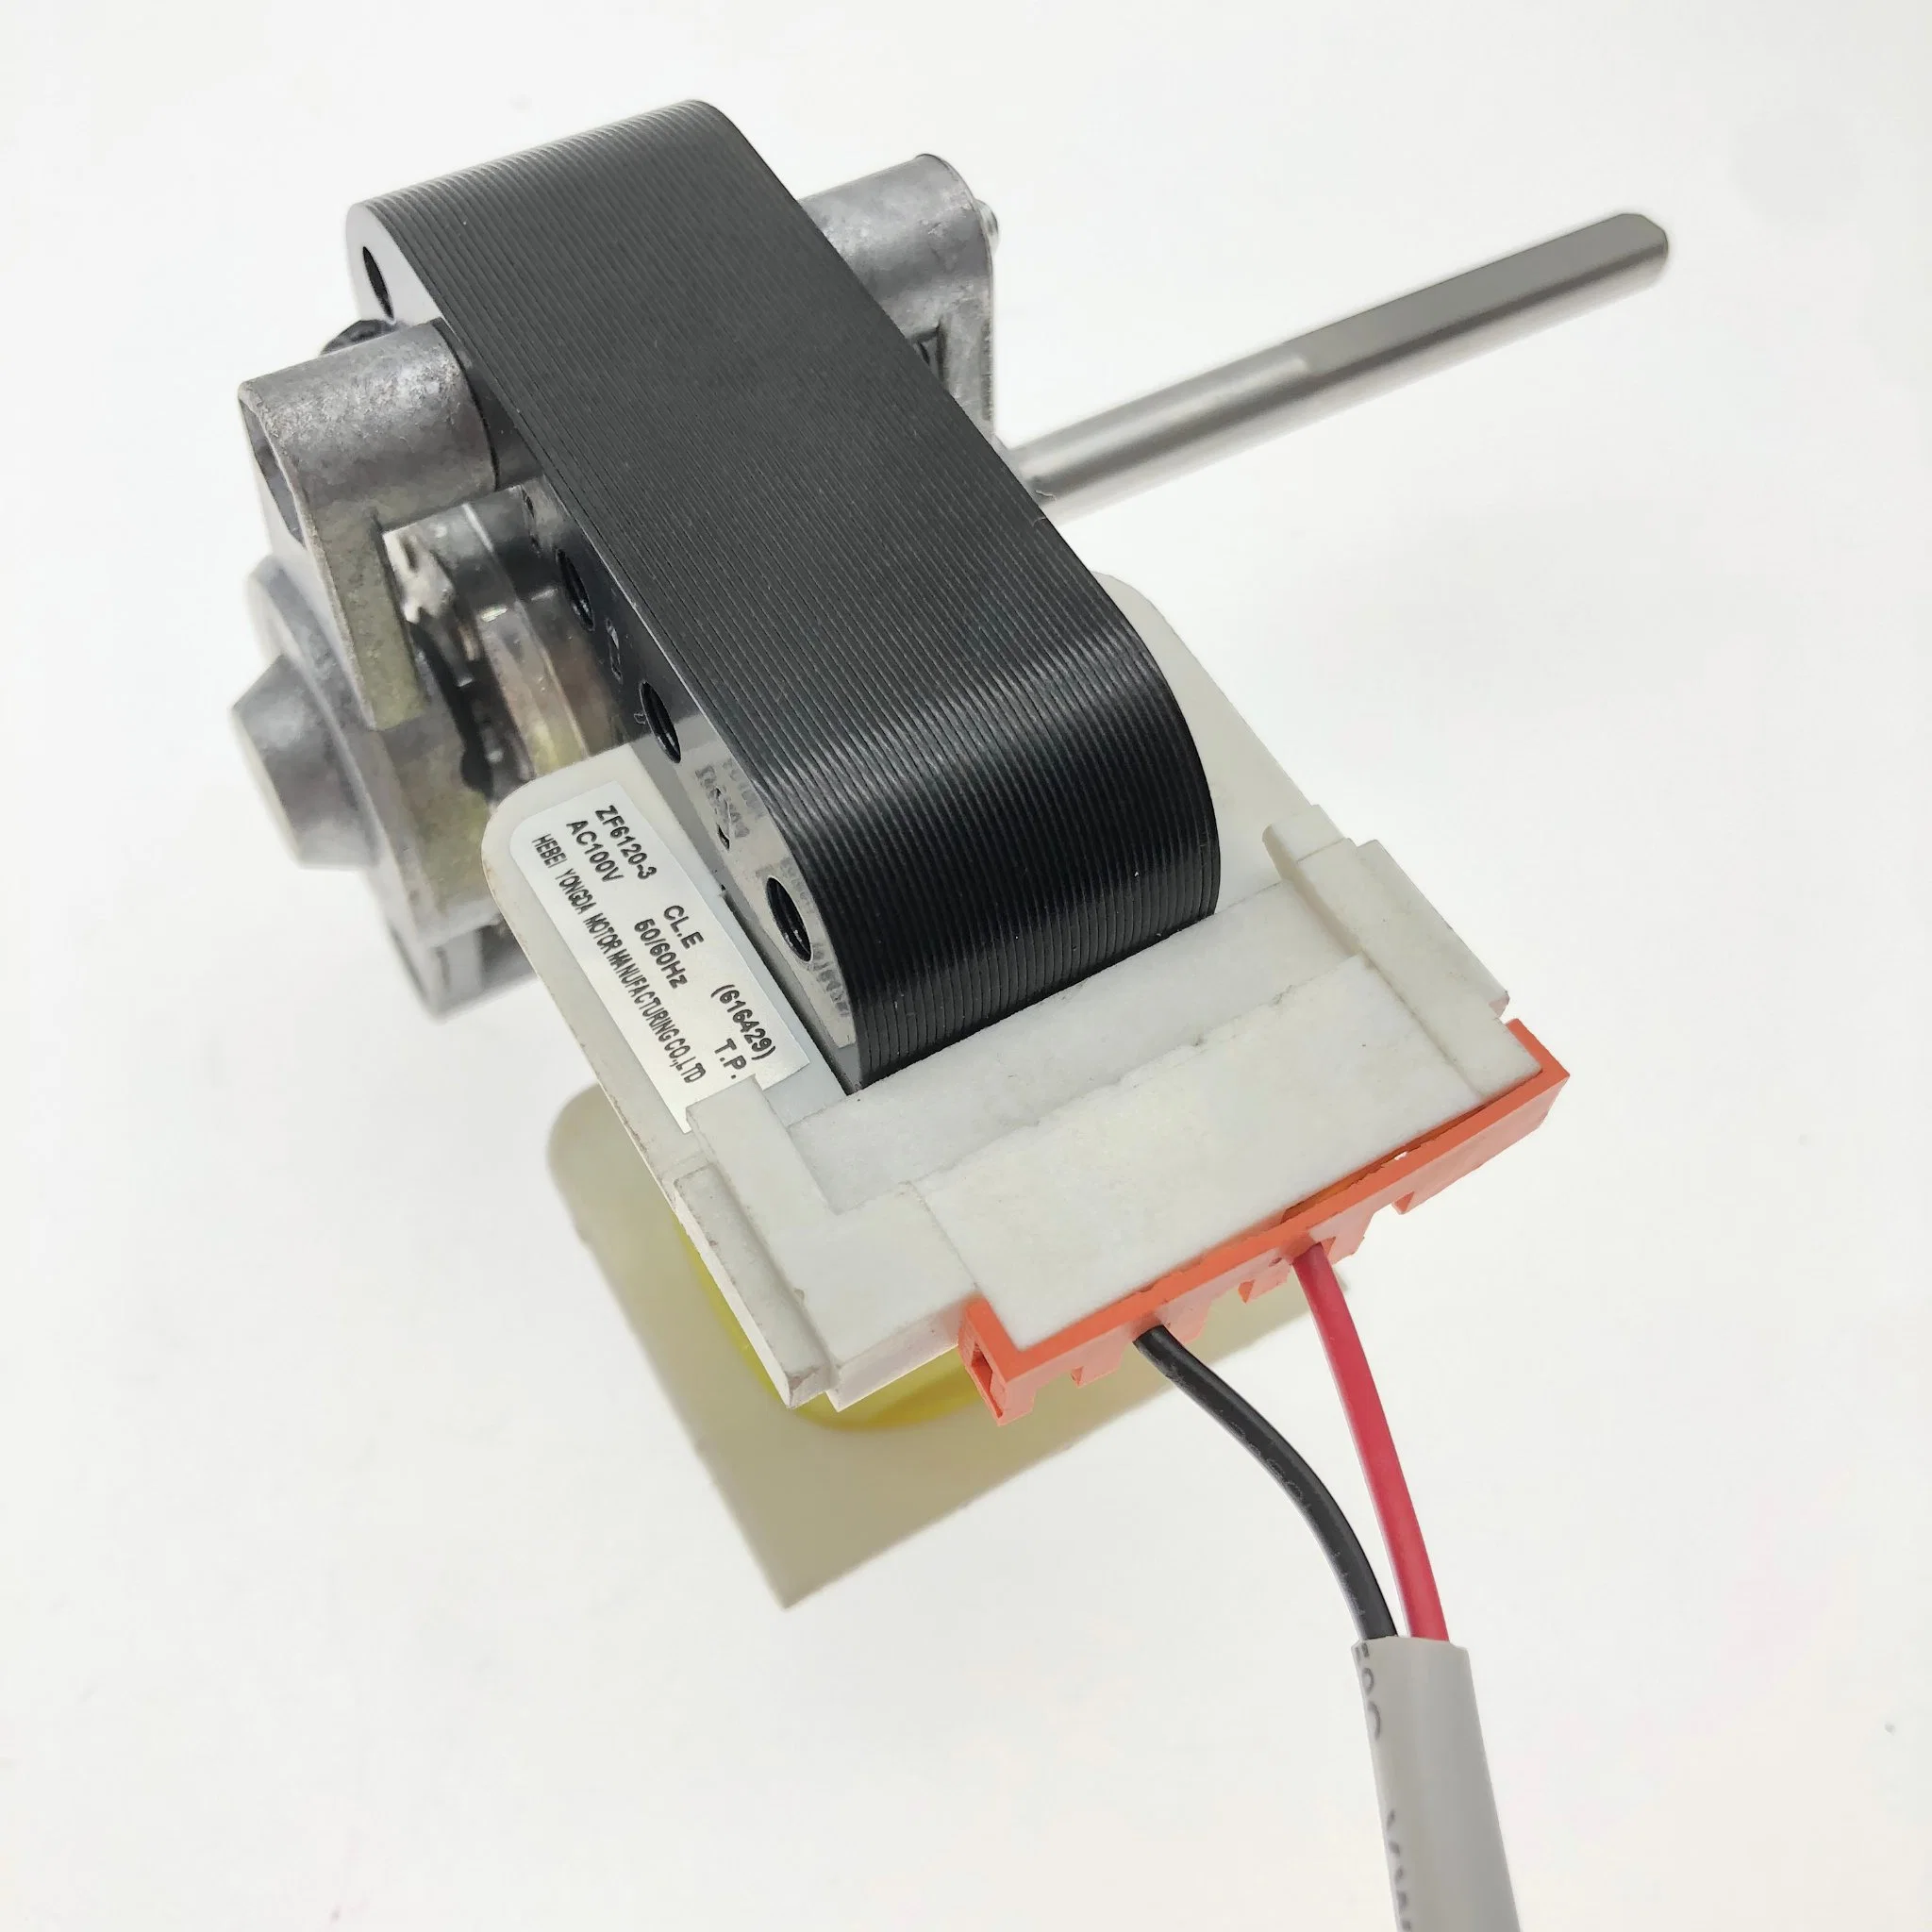 Fan Motor Micro Shaded Pole Motor for Refrigertor Microwave Oven Warmer